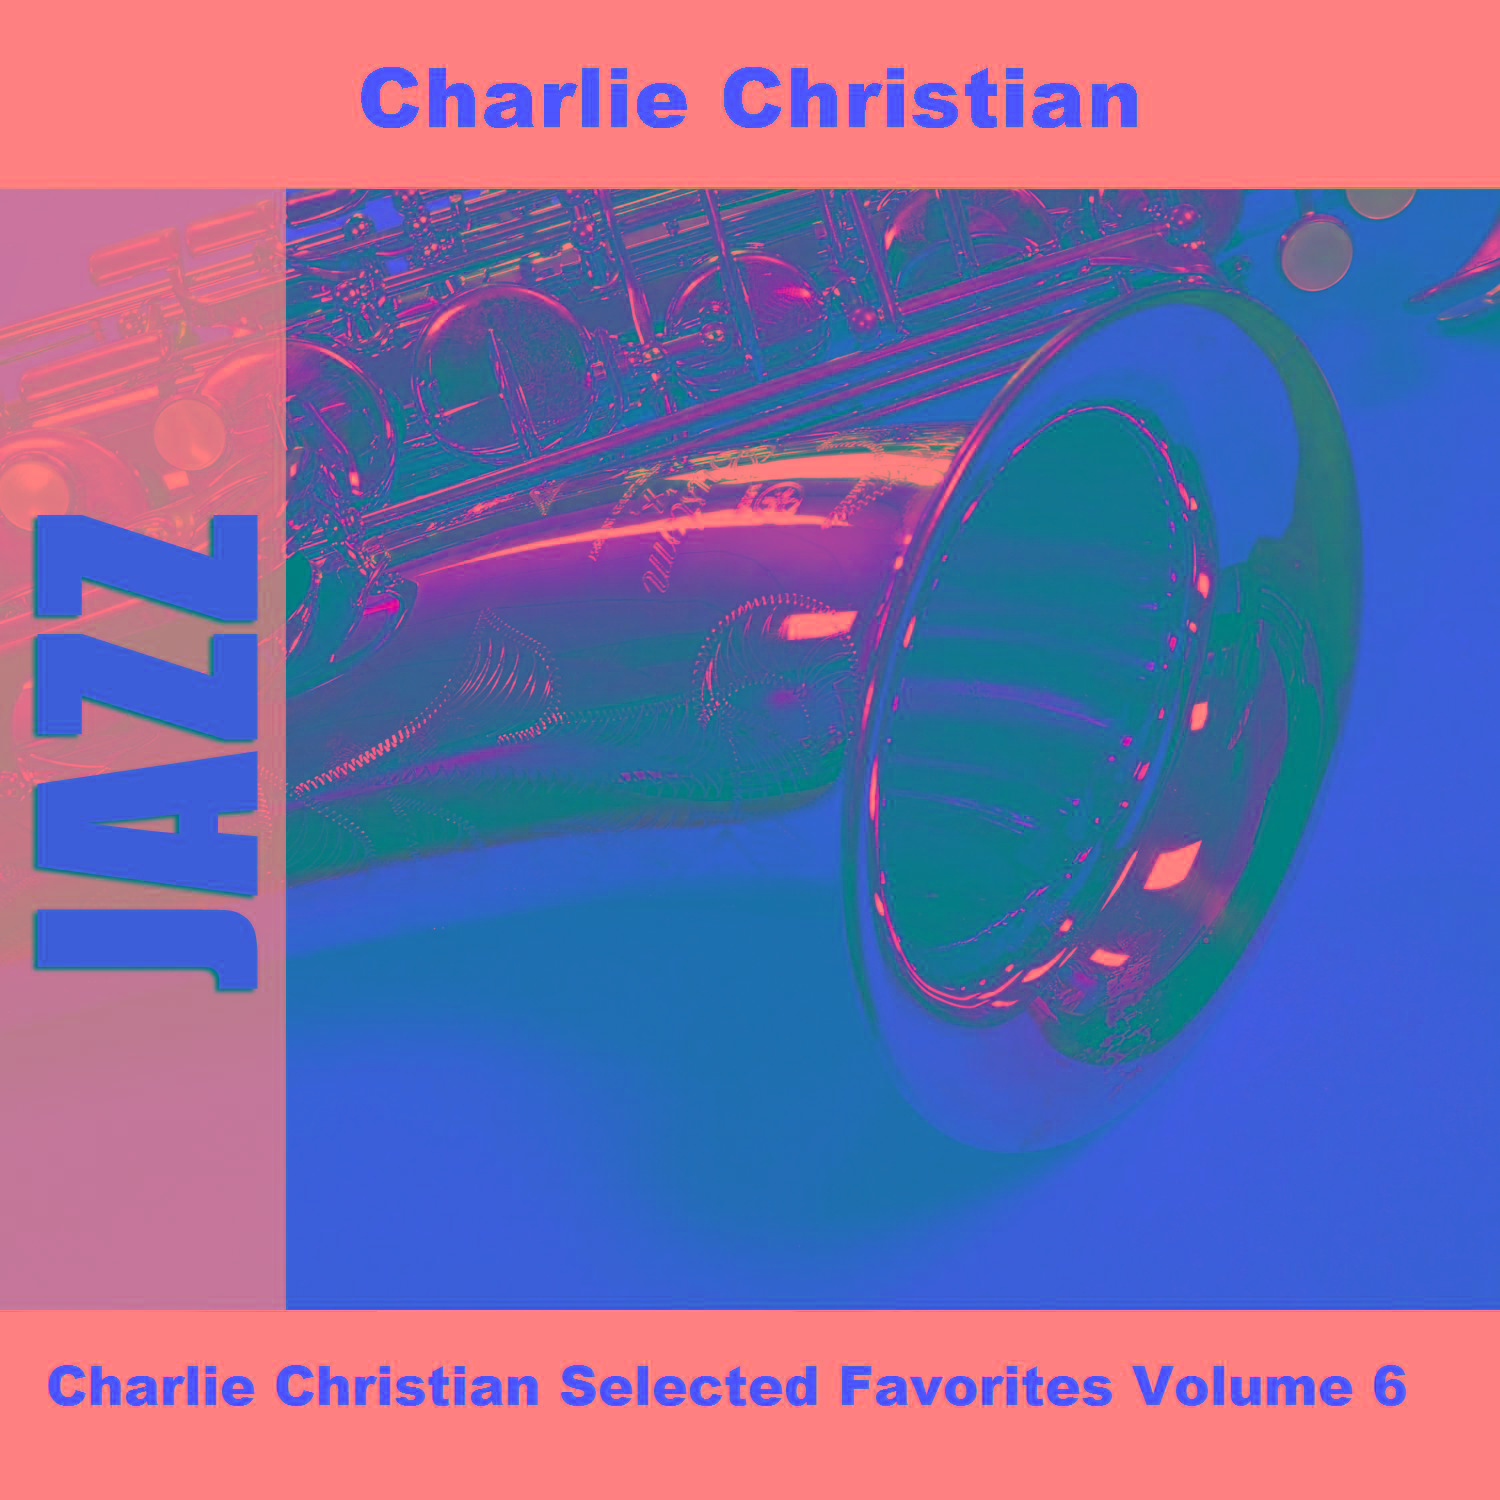 Charlie Christian Selected Favorites Volume 6